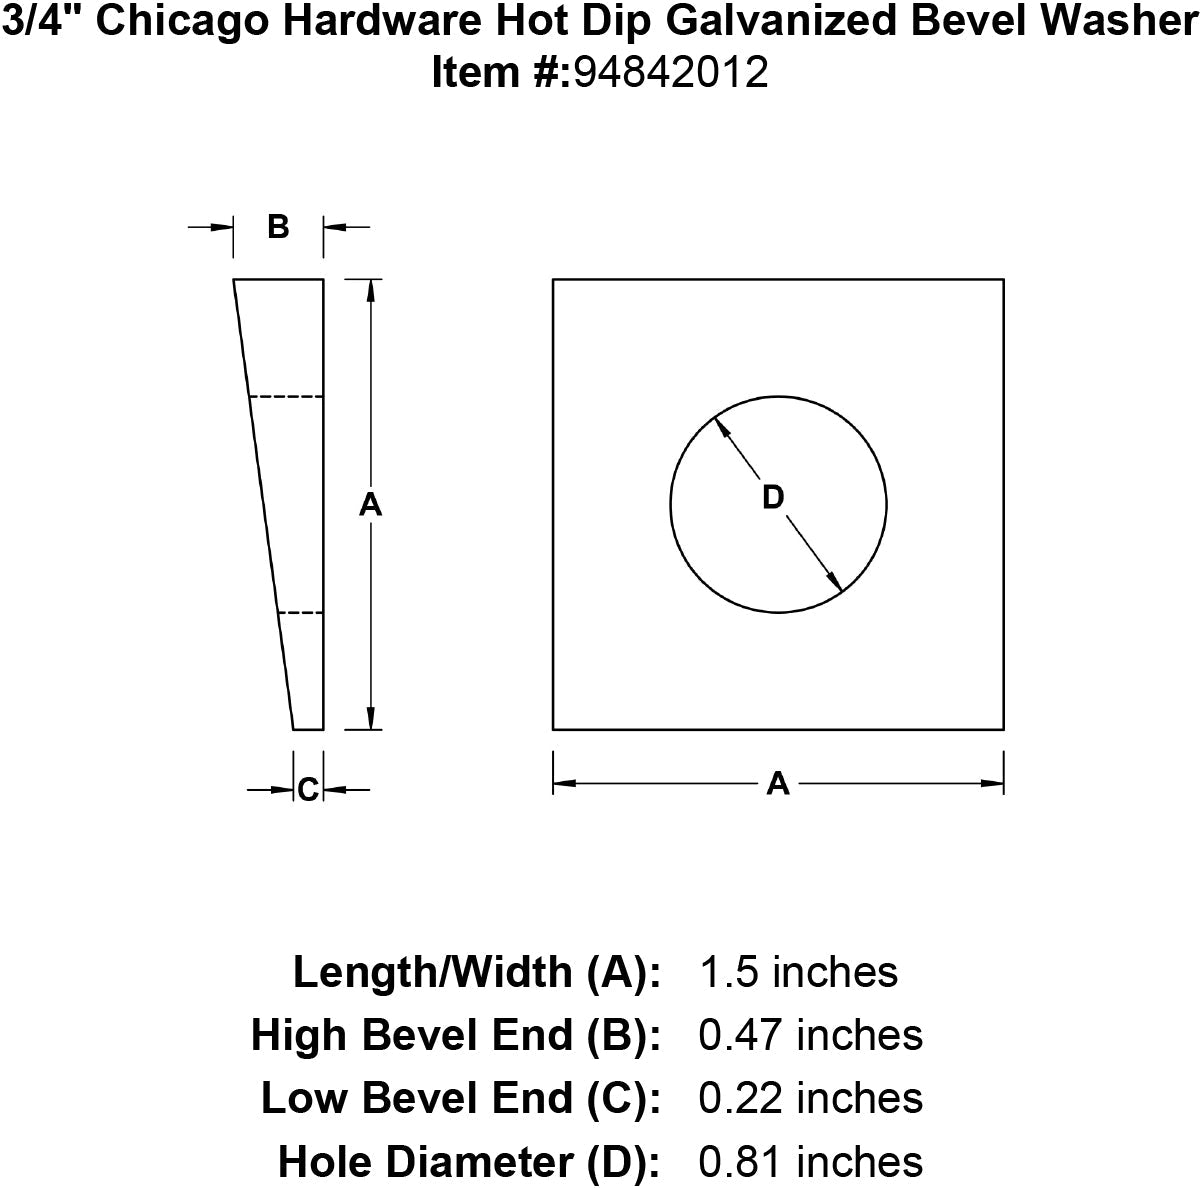 Chicago Hardware Hot Dip Galvanized Bevel Washers